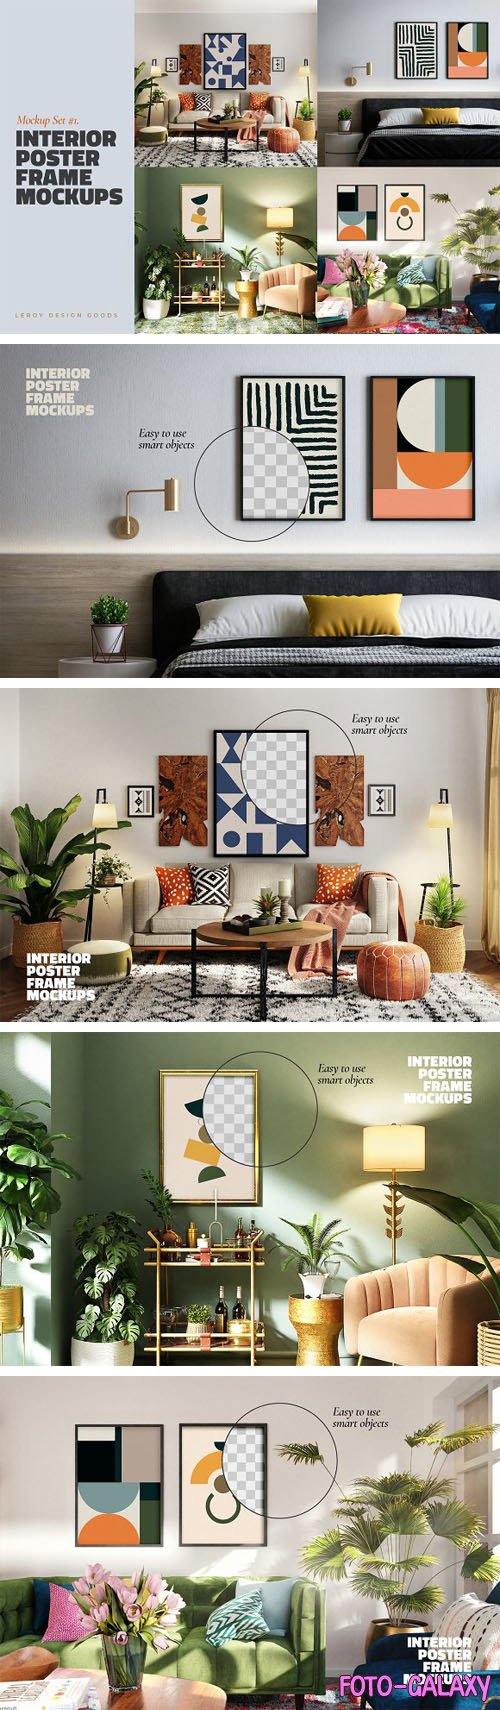 Modern Interior Poster Frames PSD Mockups Templates